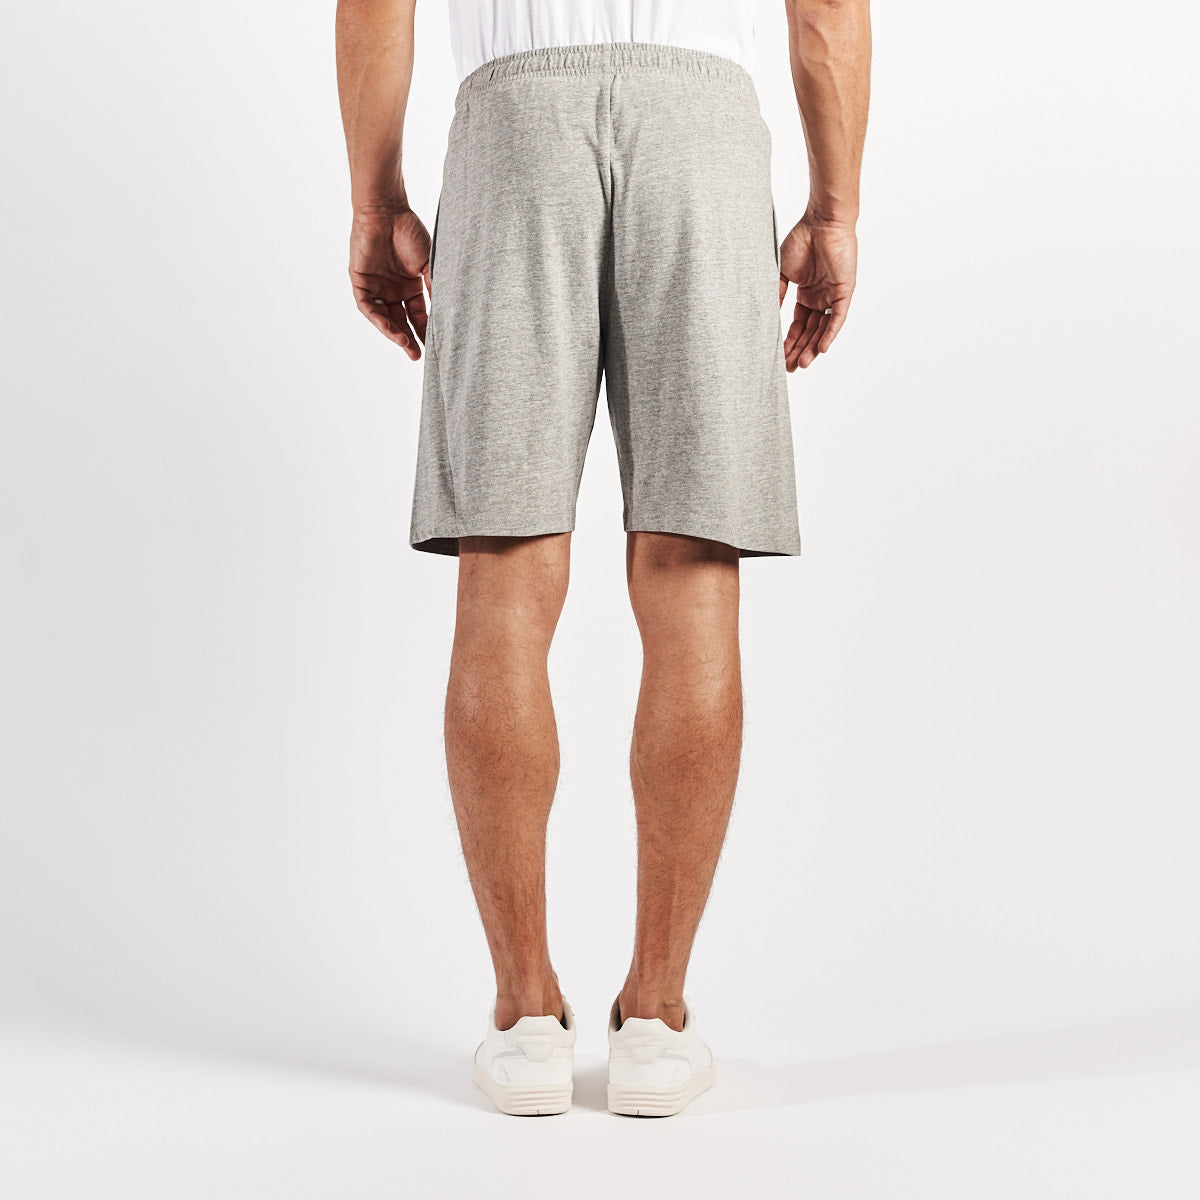 Pantalones cortes gris Kortimery hombre - imagen 3